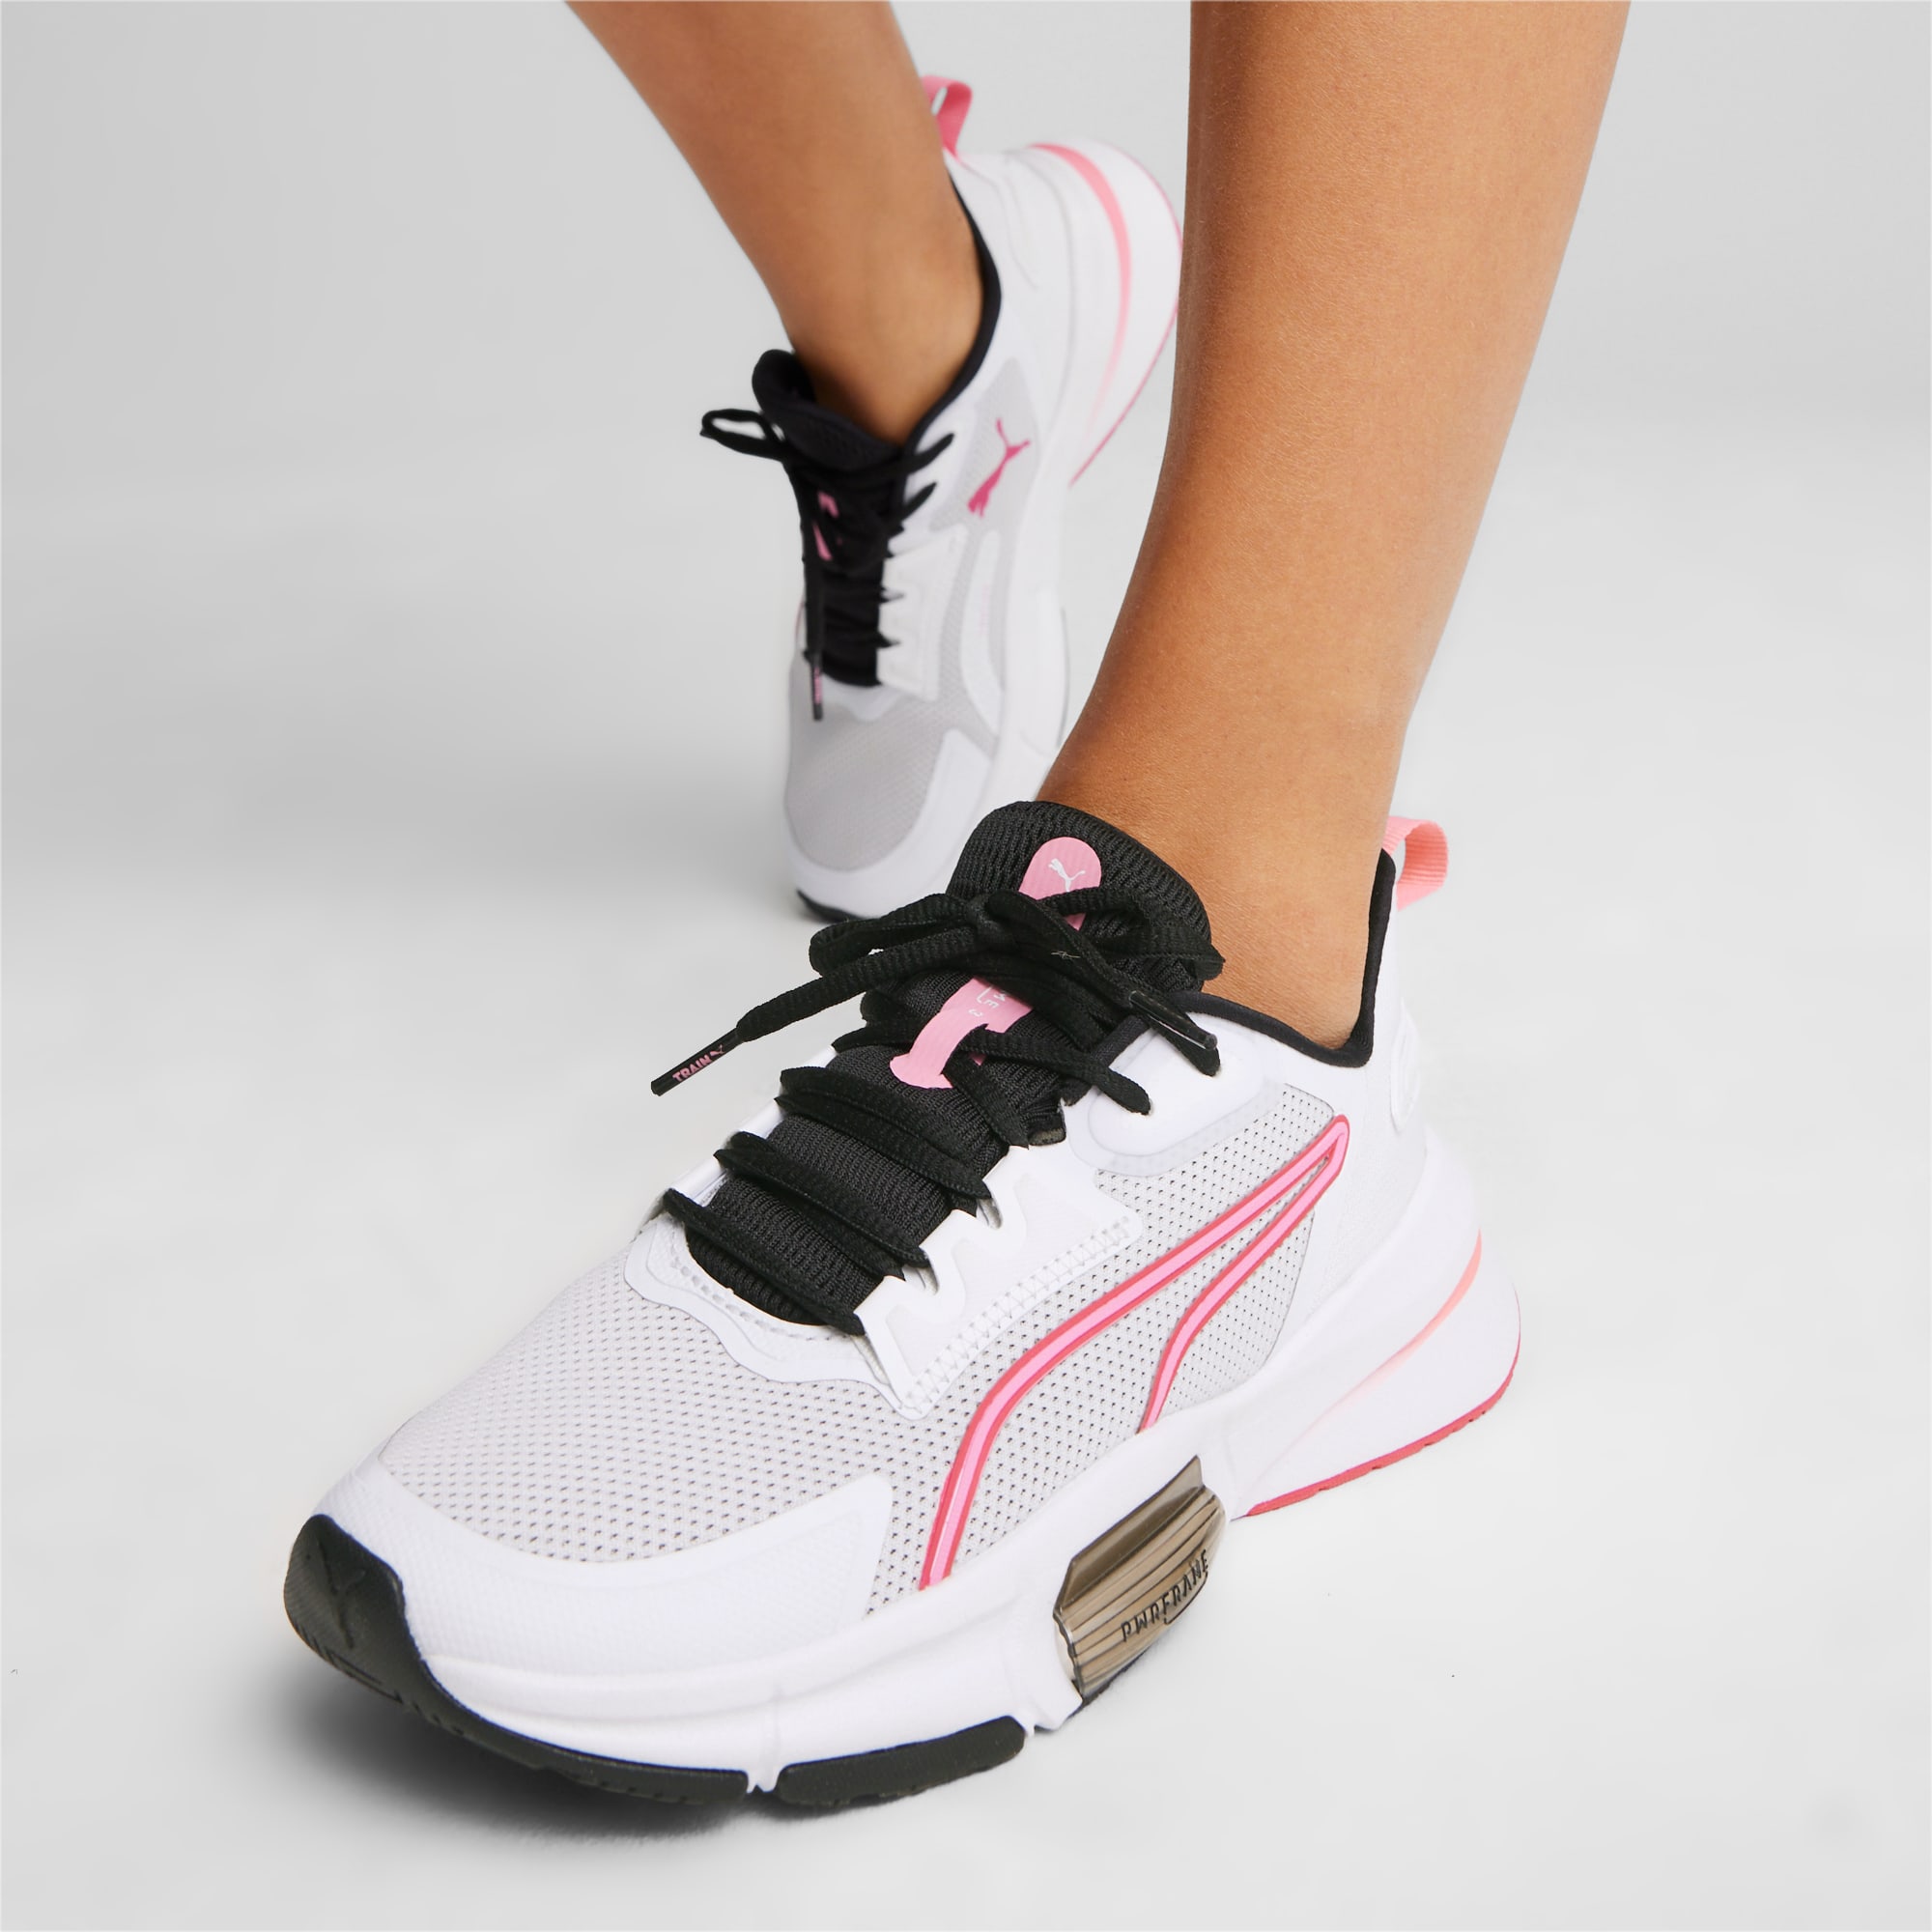 PUMA Pwrframe Tr 3 Women's Training Shoes, White/Garnet Rose/Fast Pink, Size 35,5, Shoes